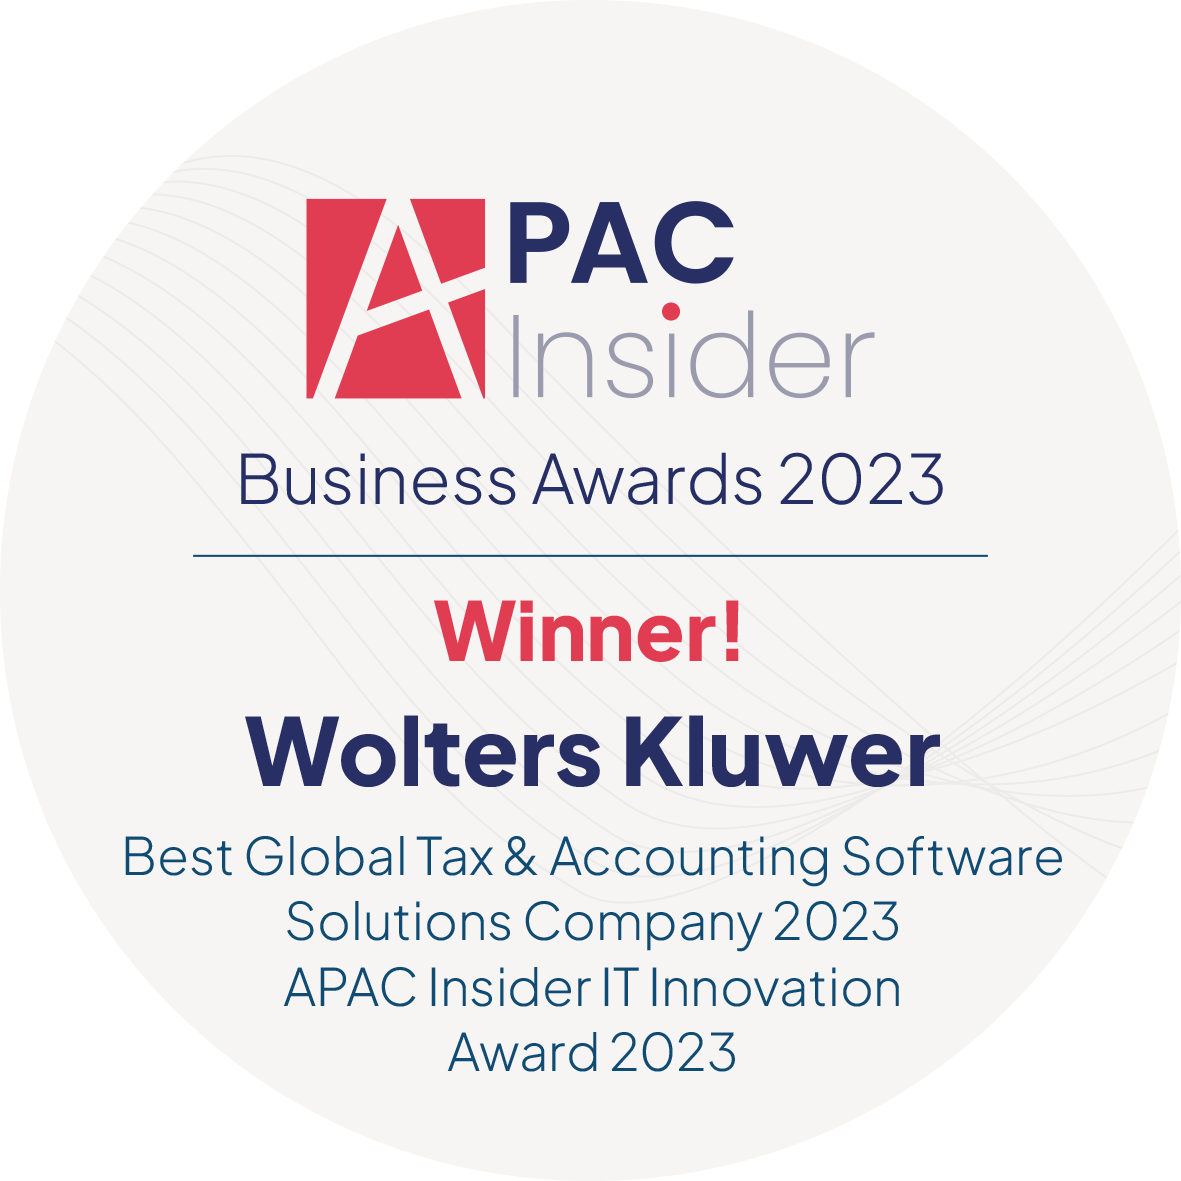 APAC Insider Business Awards 2023